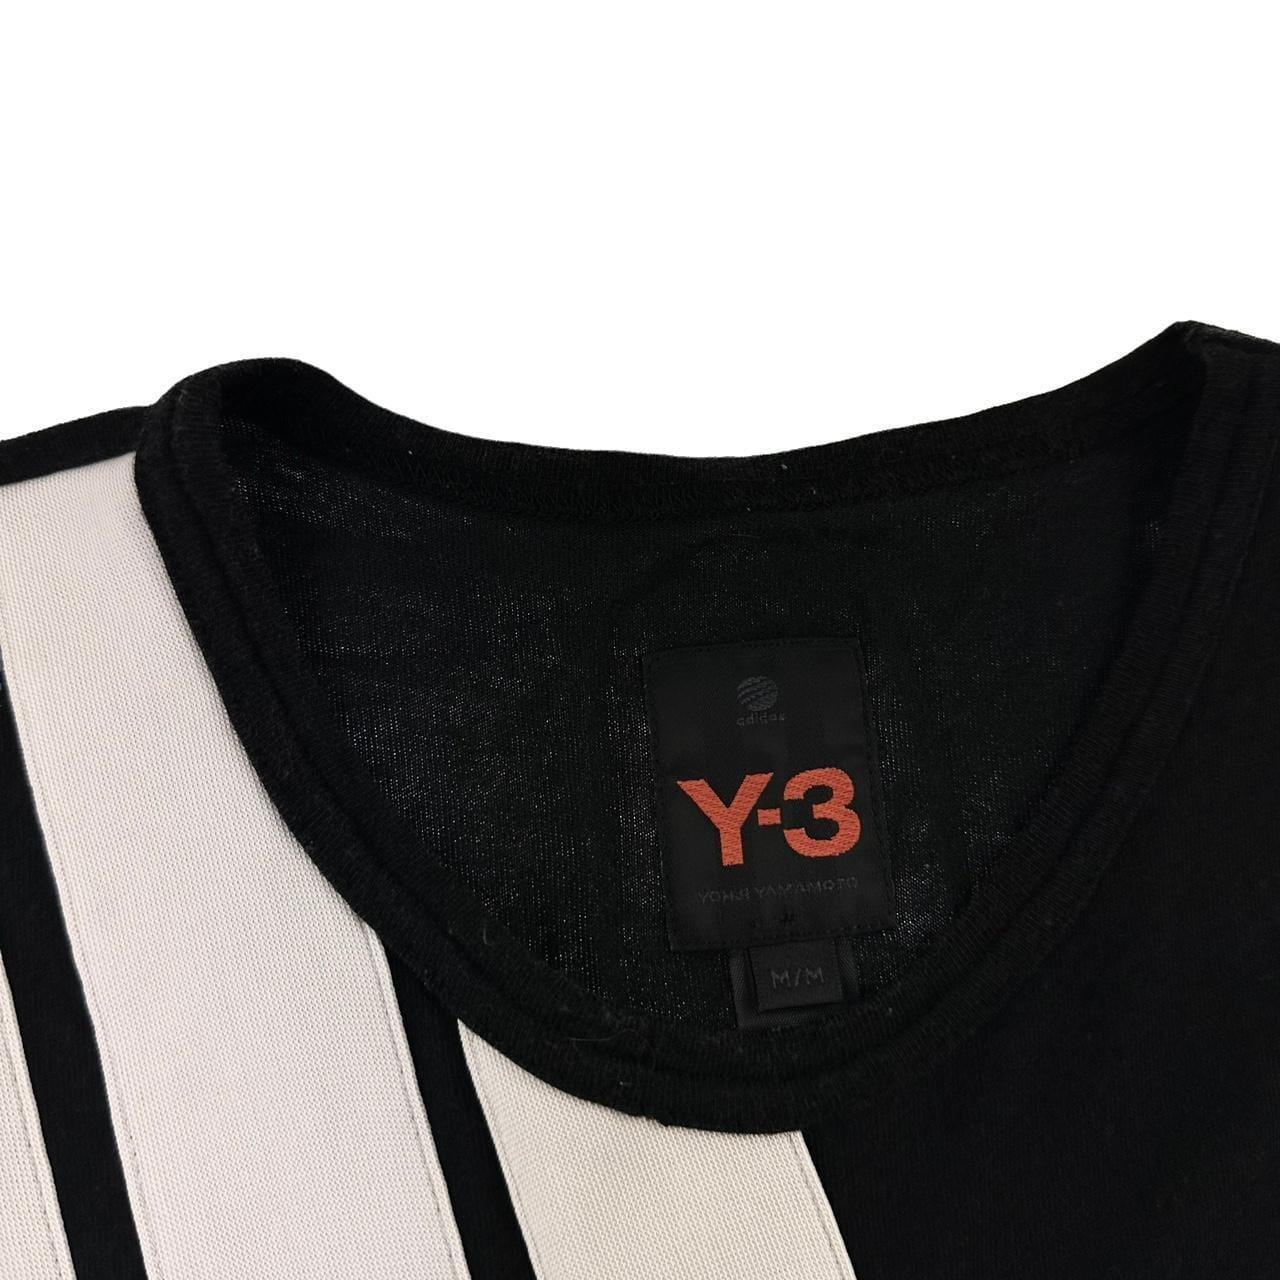 Vintage Yohji Yamamoto Y-3 stripe vest size M - Known Source